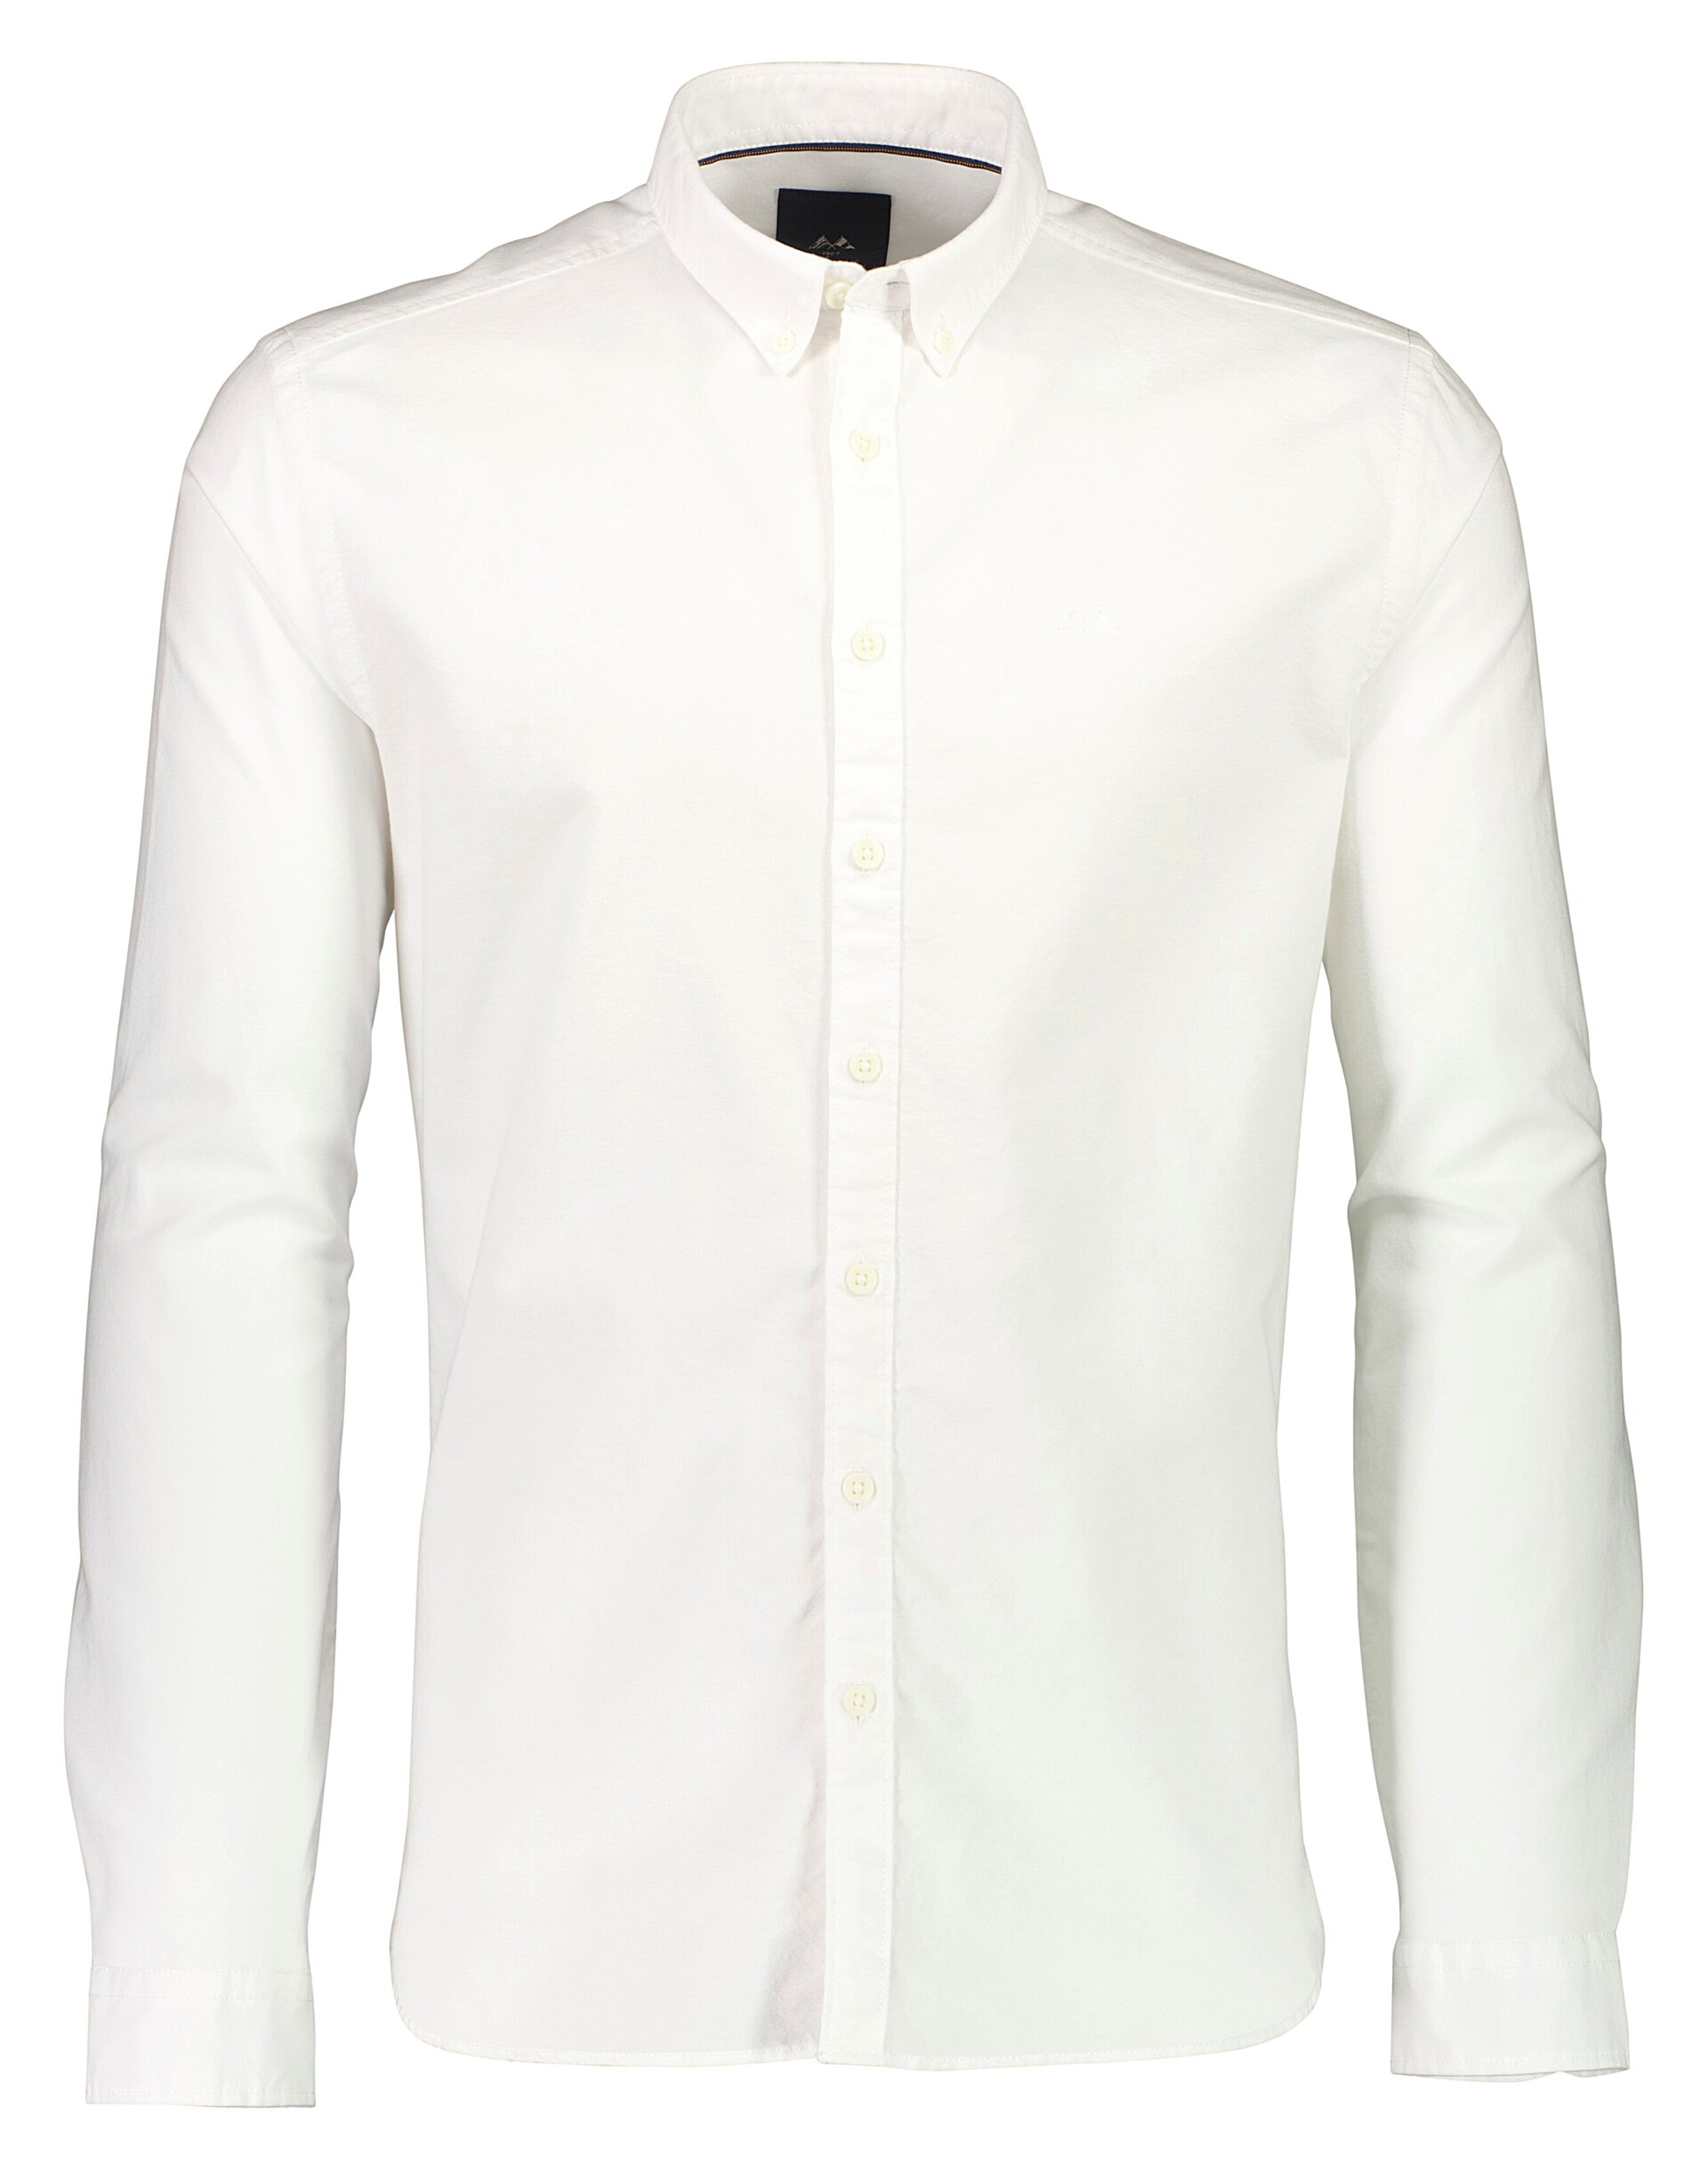 Lindbergh Oxford overhemd wit / white